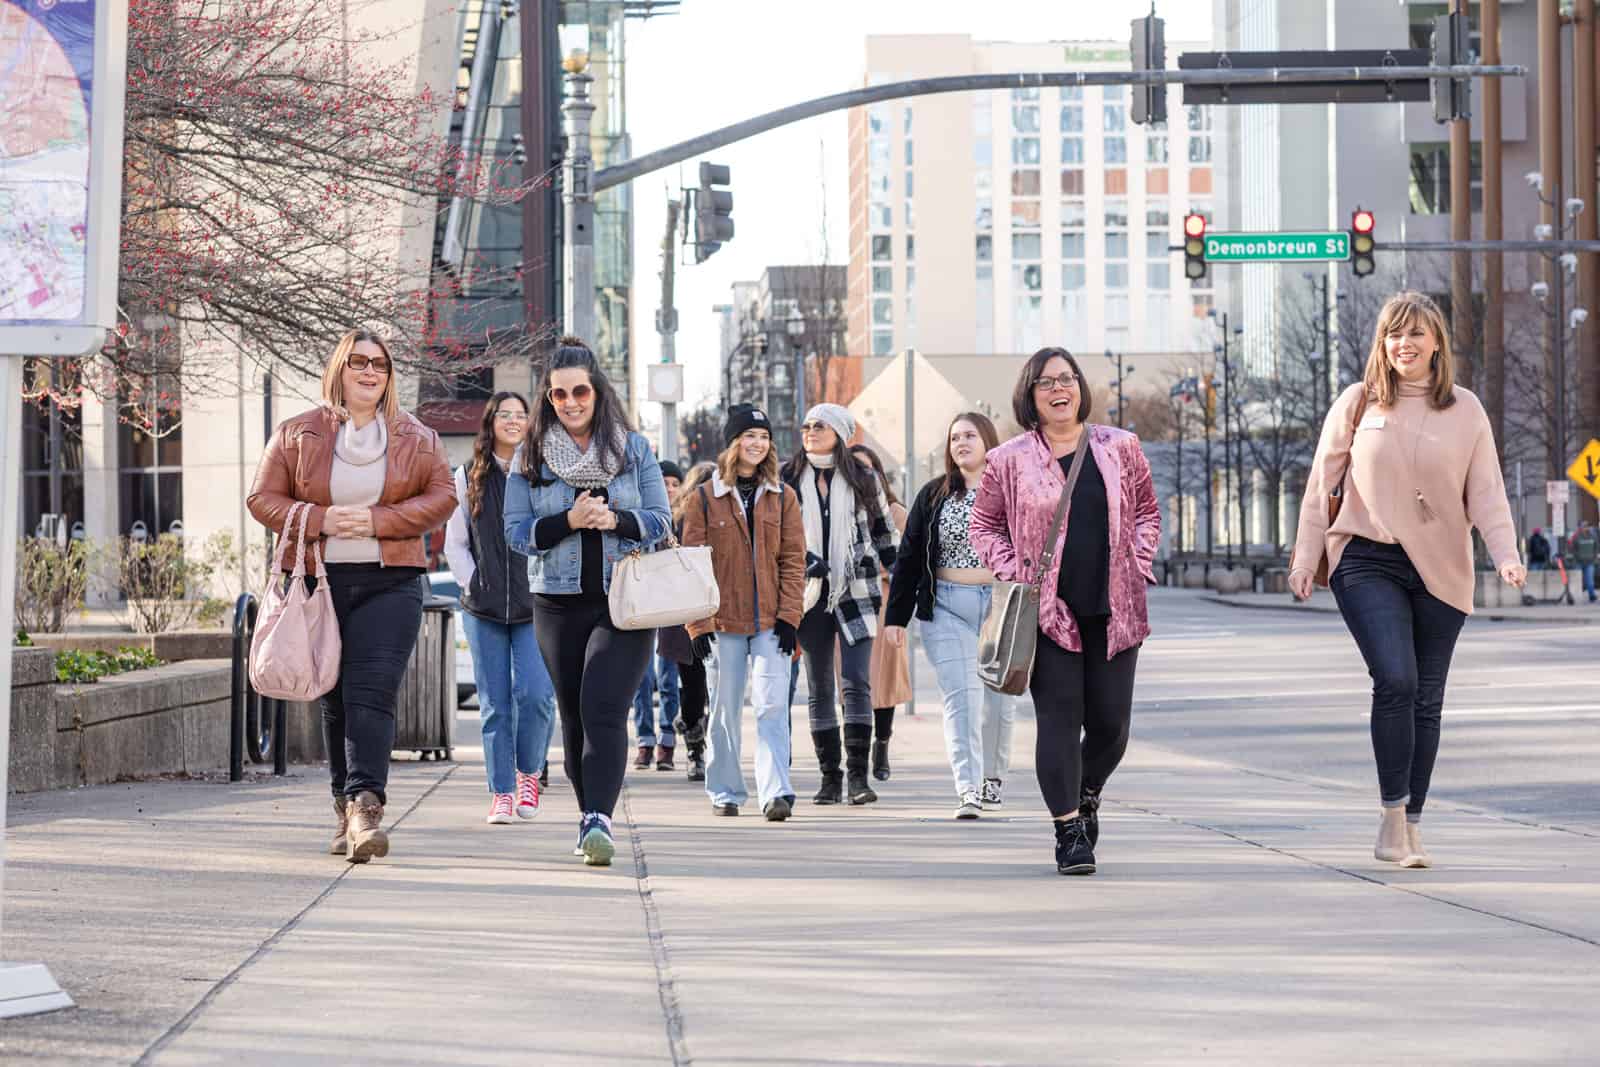 Group of women on a tour walking up urban street.